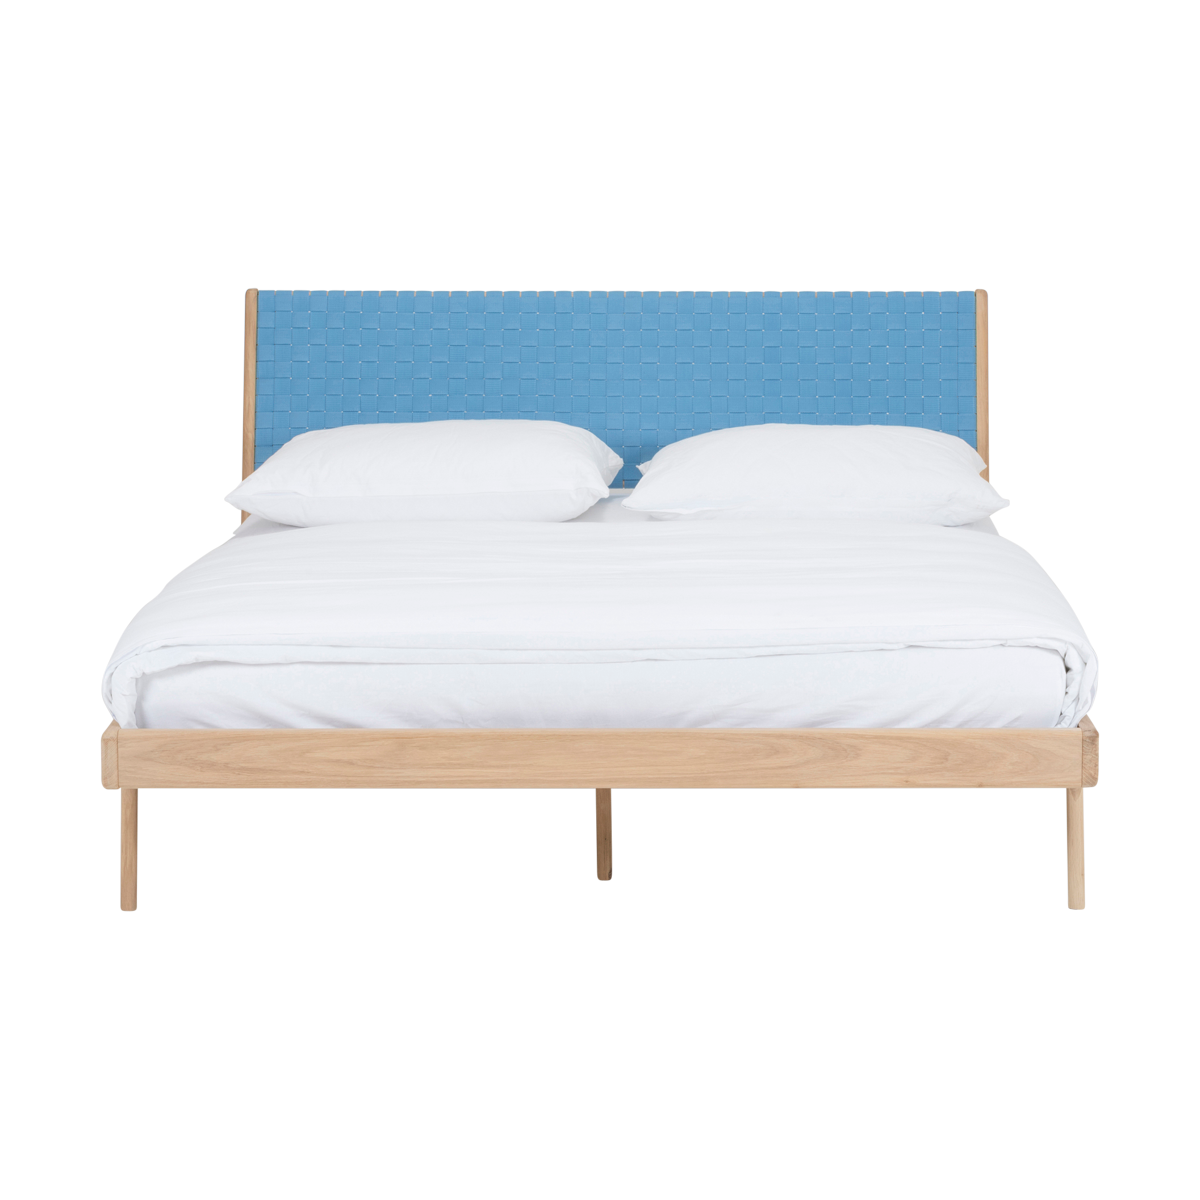 sofa kamp Vertrek Fawn bed deep frame - Houten bed whitewash met cotton webbing blue 4581 -  180 x 200 | Gewoonstijl